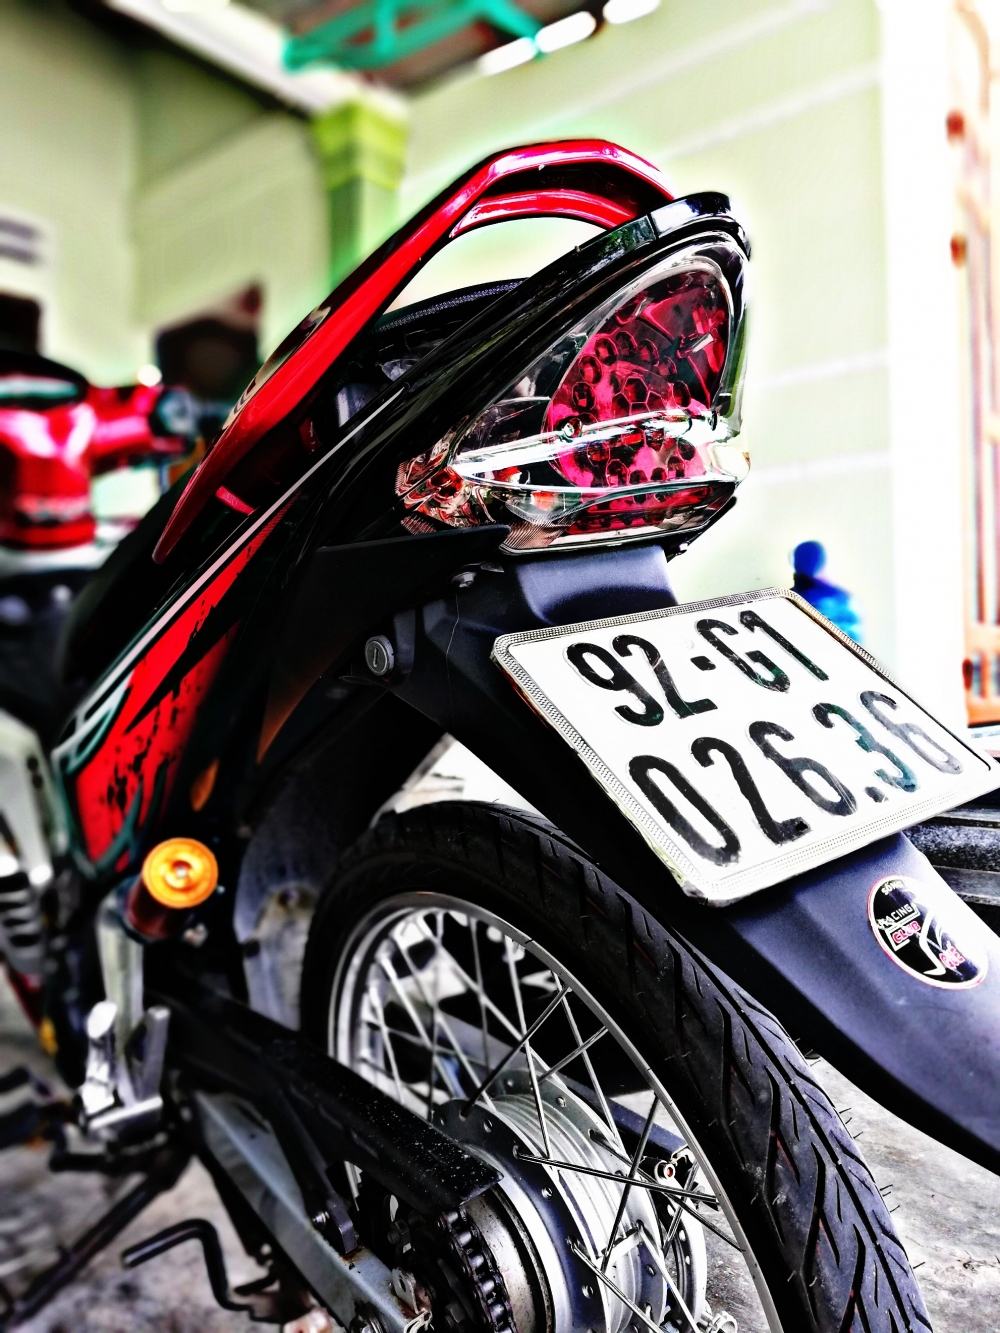 Exciter 2011 voi phong cach don gian nhe nhang cua biker Quang Nam - 7